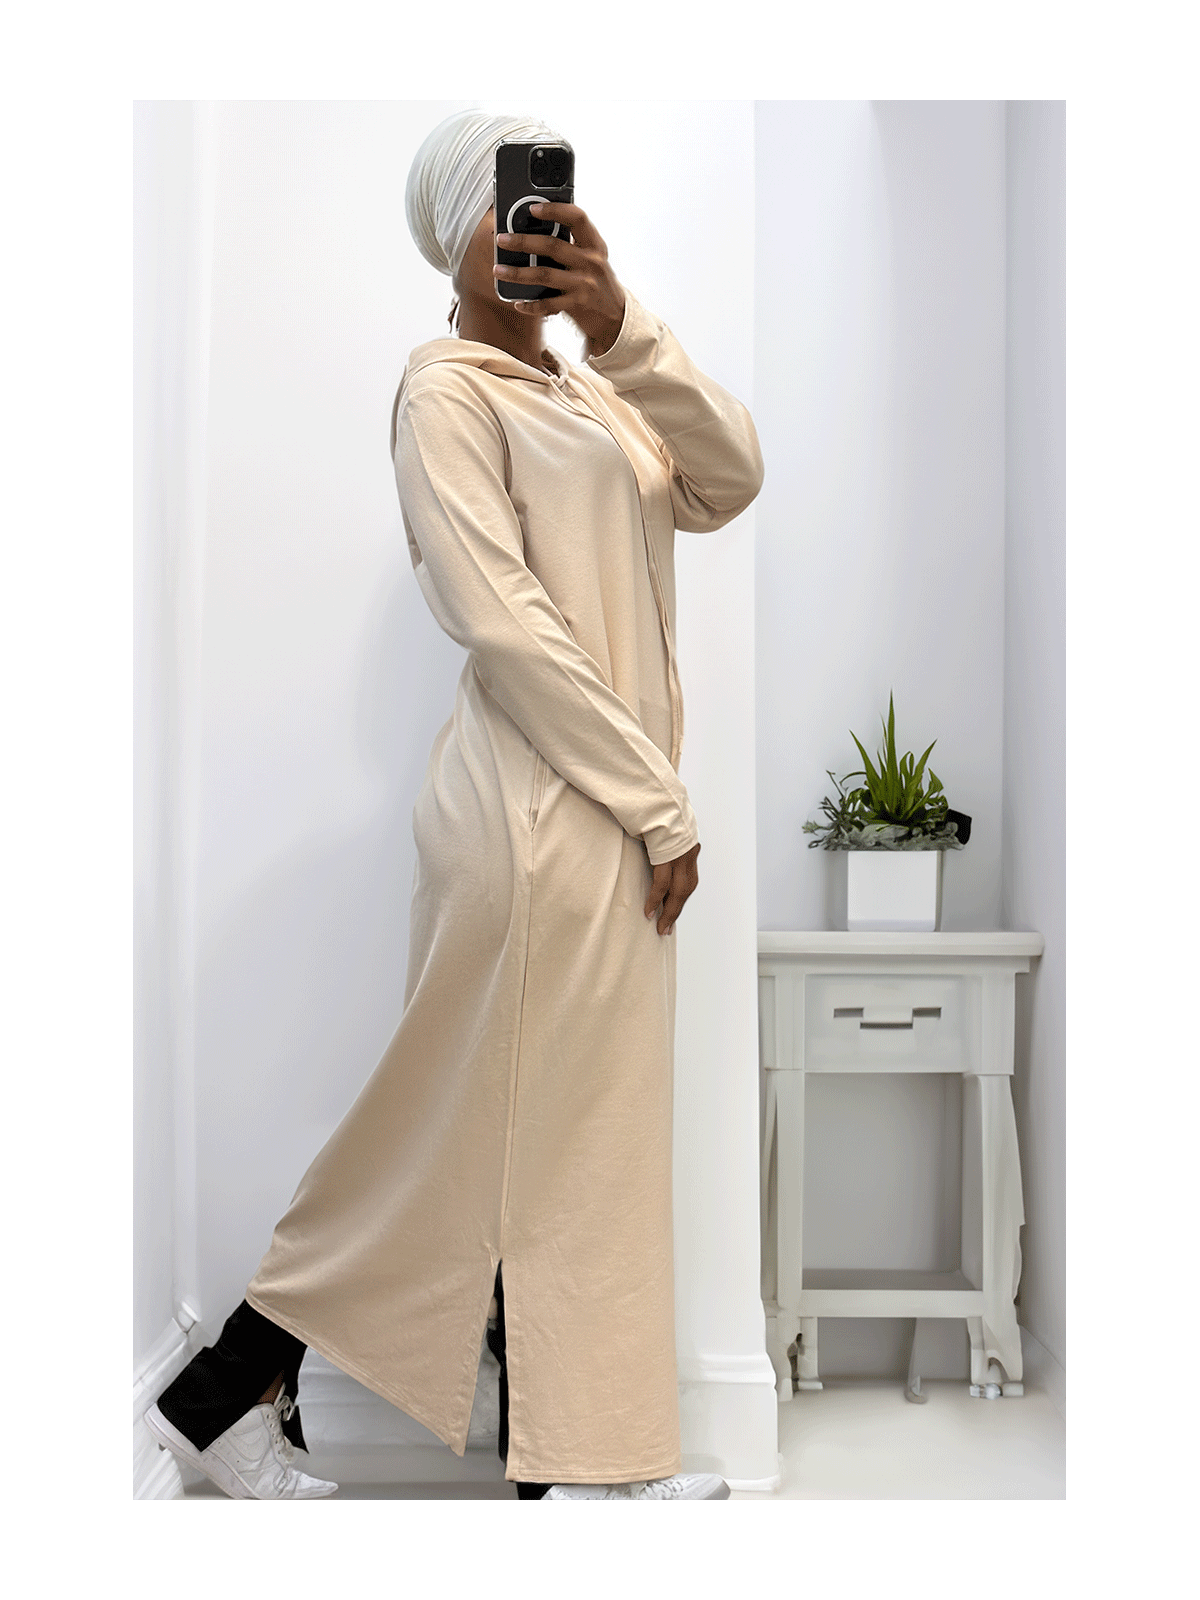 Longue robe sweat abaya beige à capuche - 3